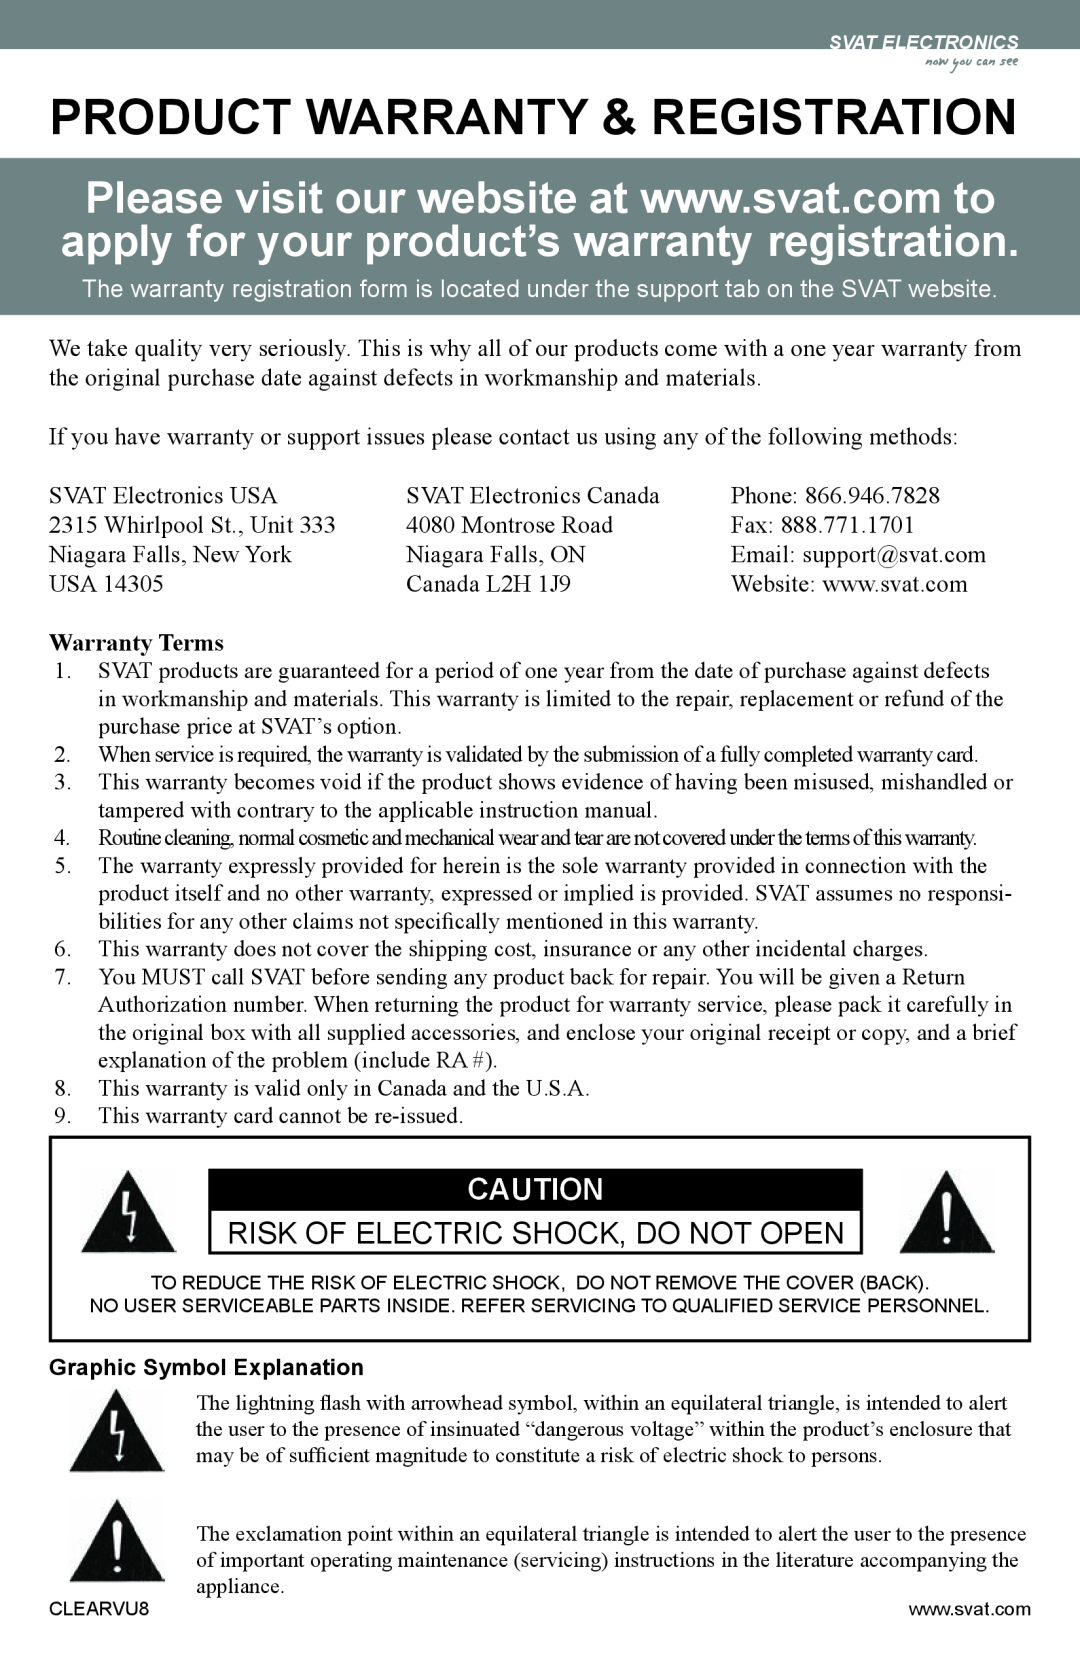 SVAT Electronics CLEARVU8 instruction manual Product Warranty & Registration, Risk Of Electric Shock, Do Not Open 